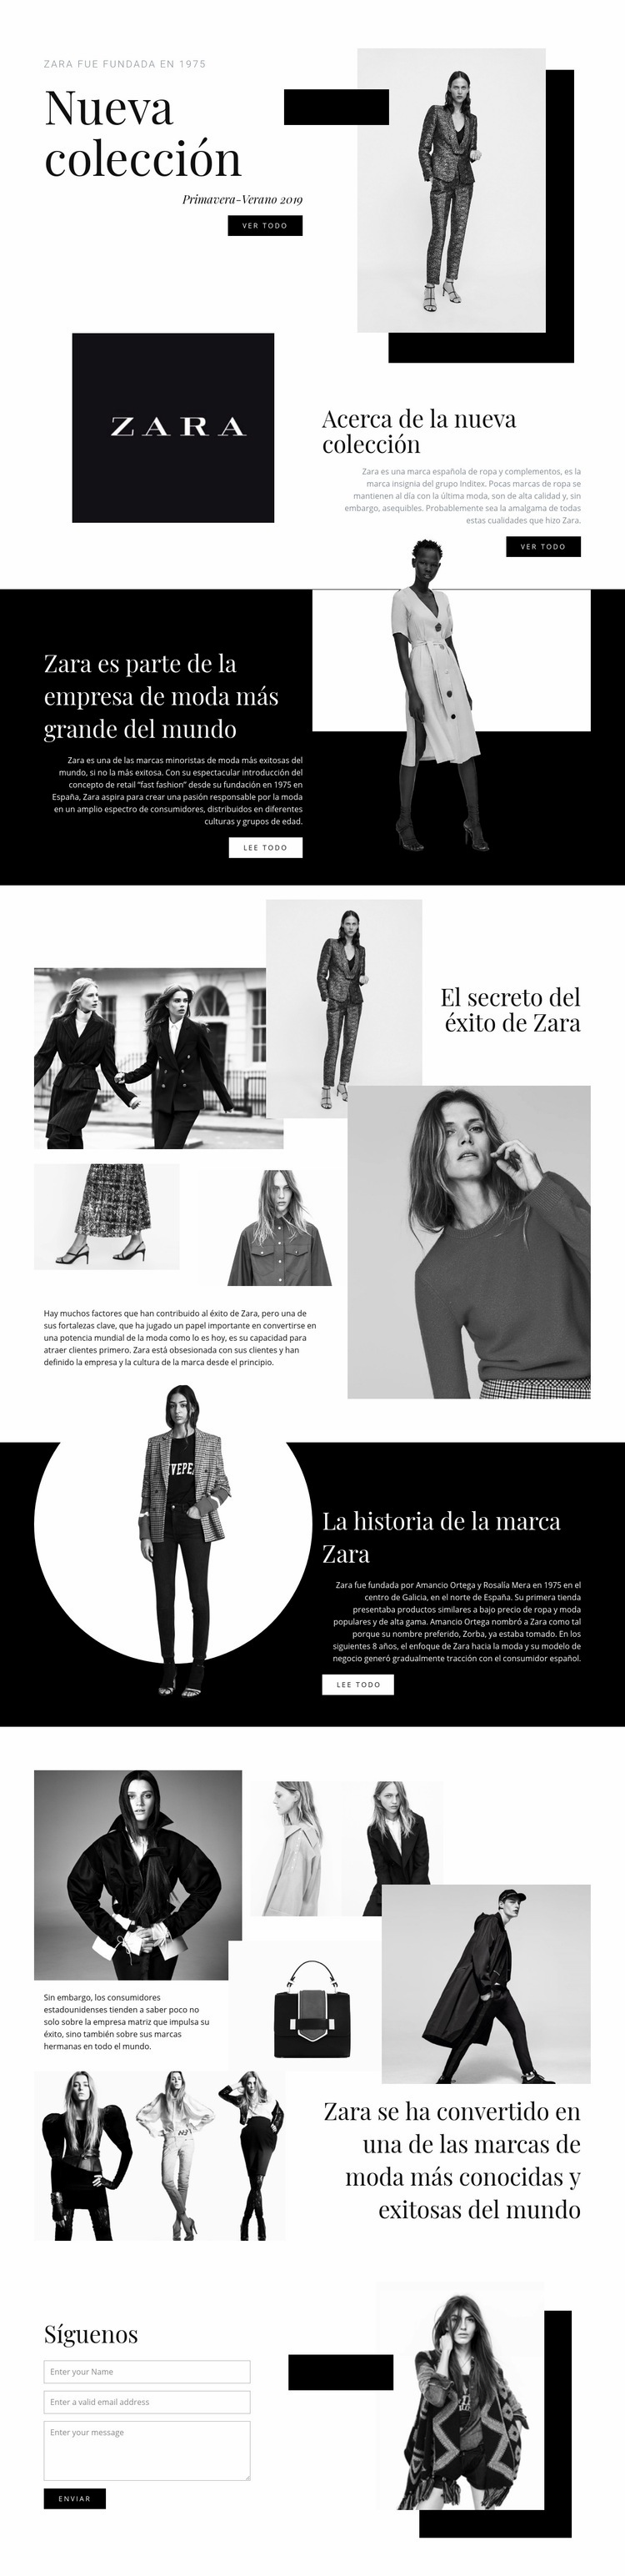 Colección Zara Plantillas de creación de sitios web